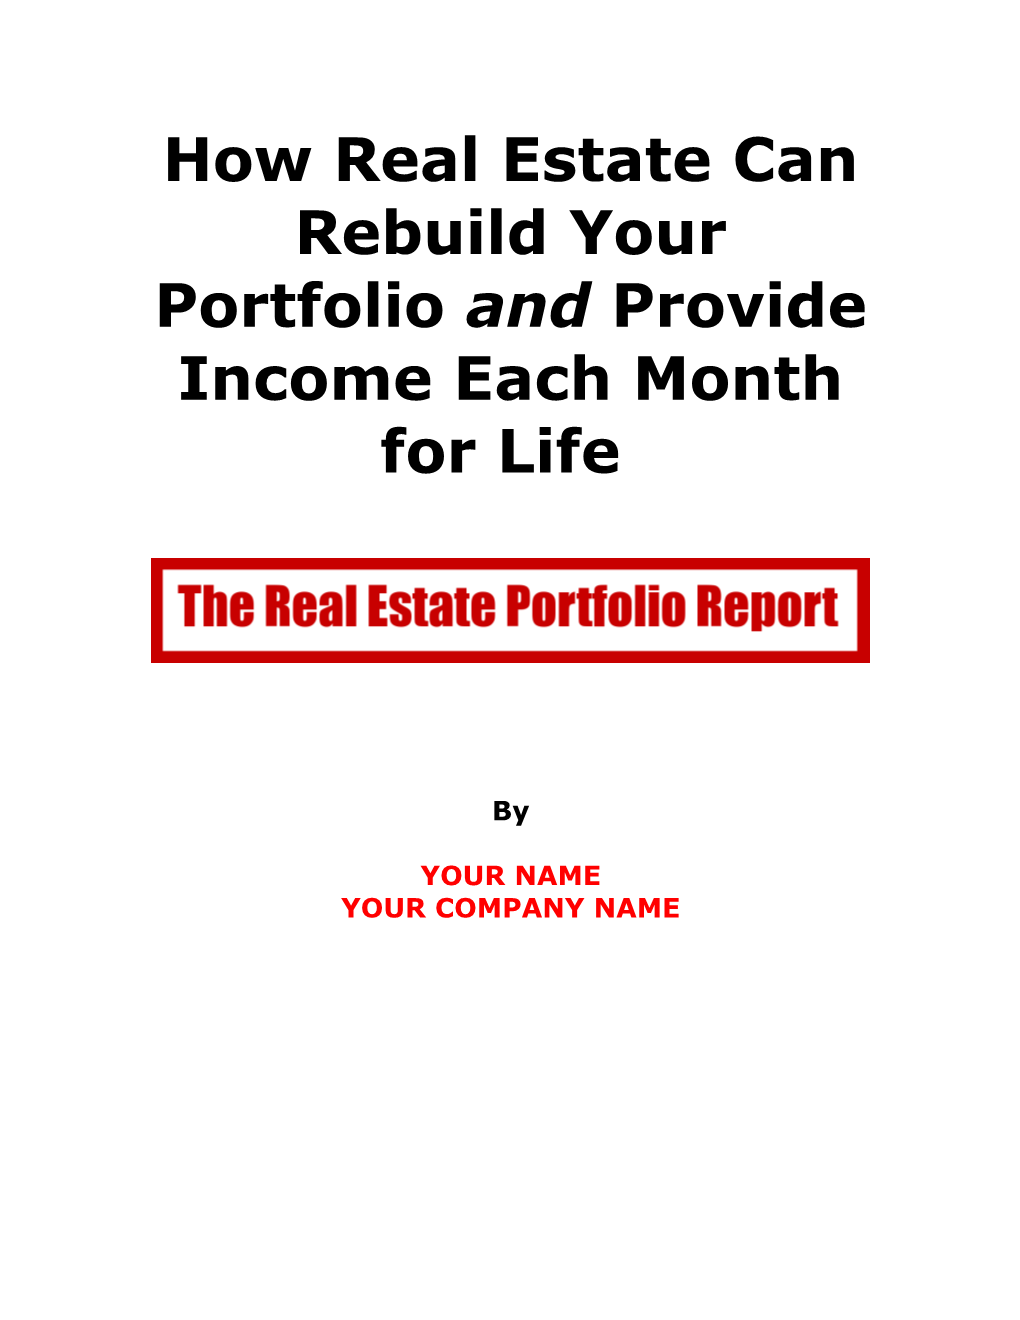 How to Make Real Estate Part of Your Rebuilt Investing Portfolio